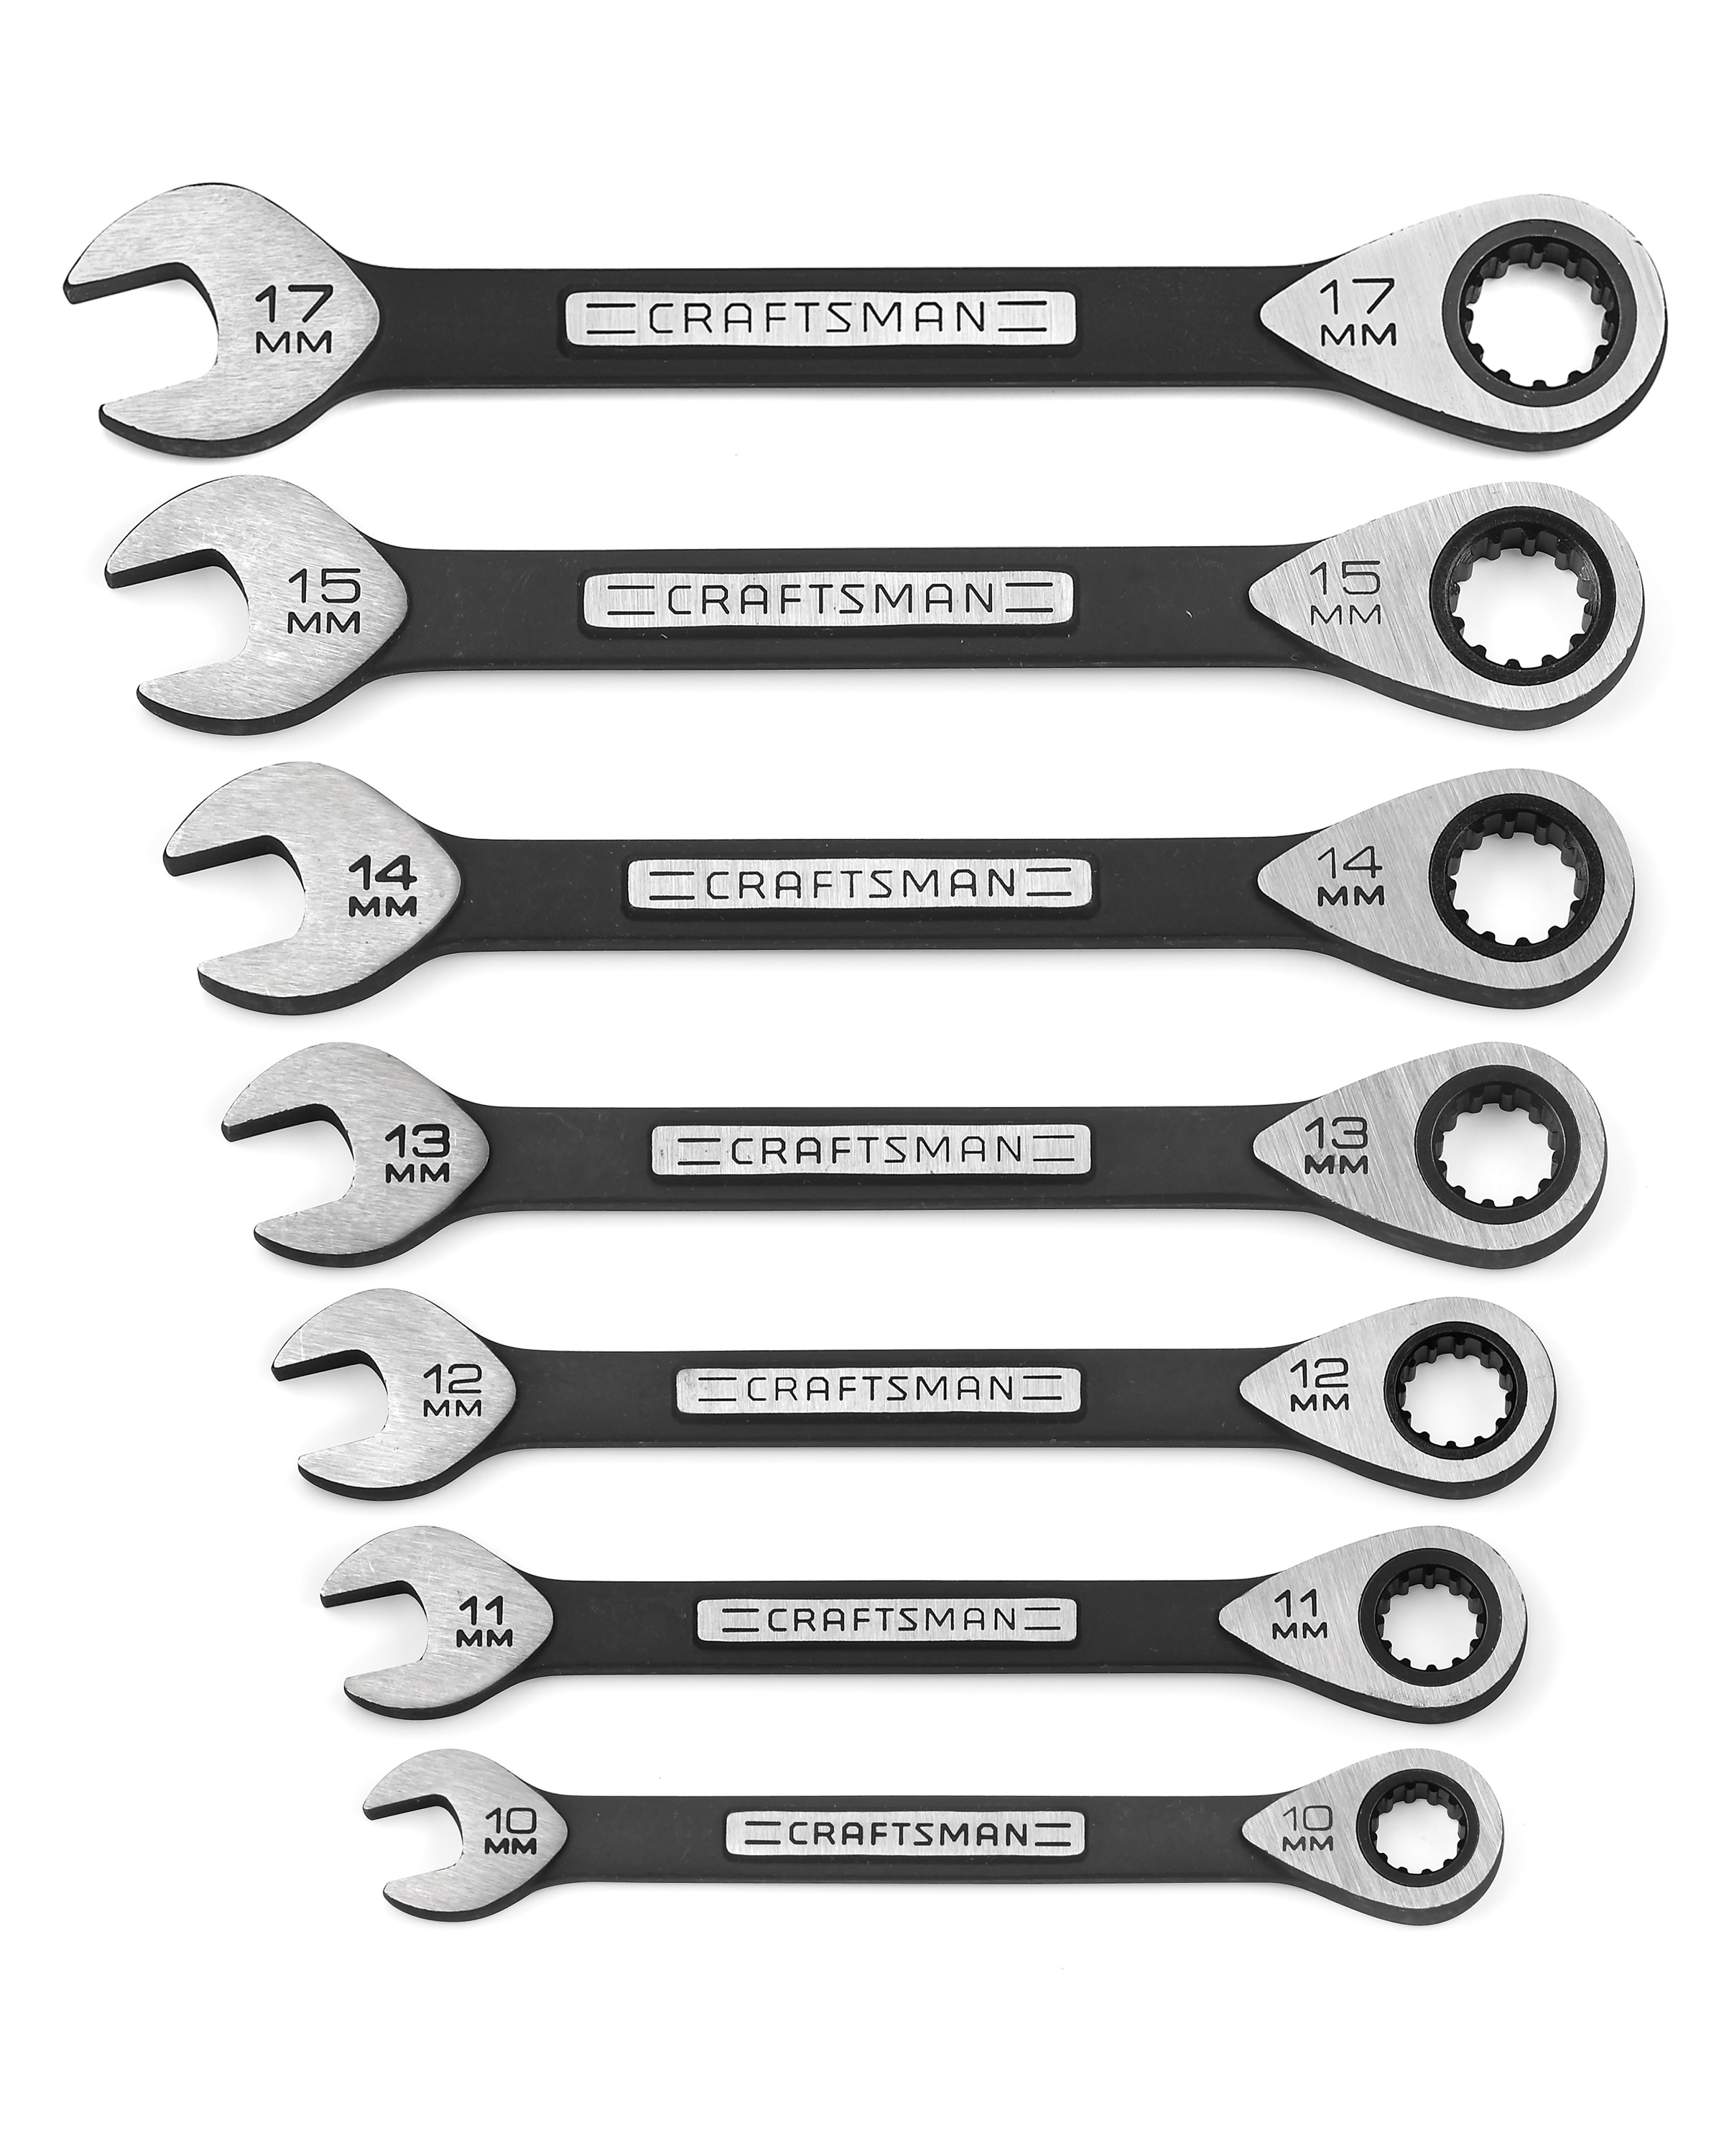 Craftsman 7-Piece Metric Universal Ratcheting Wrench Set # 21030 